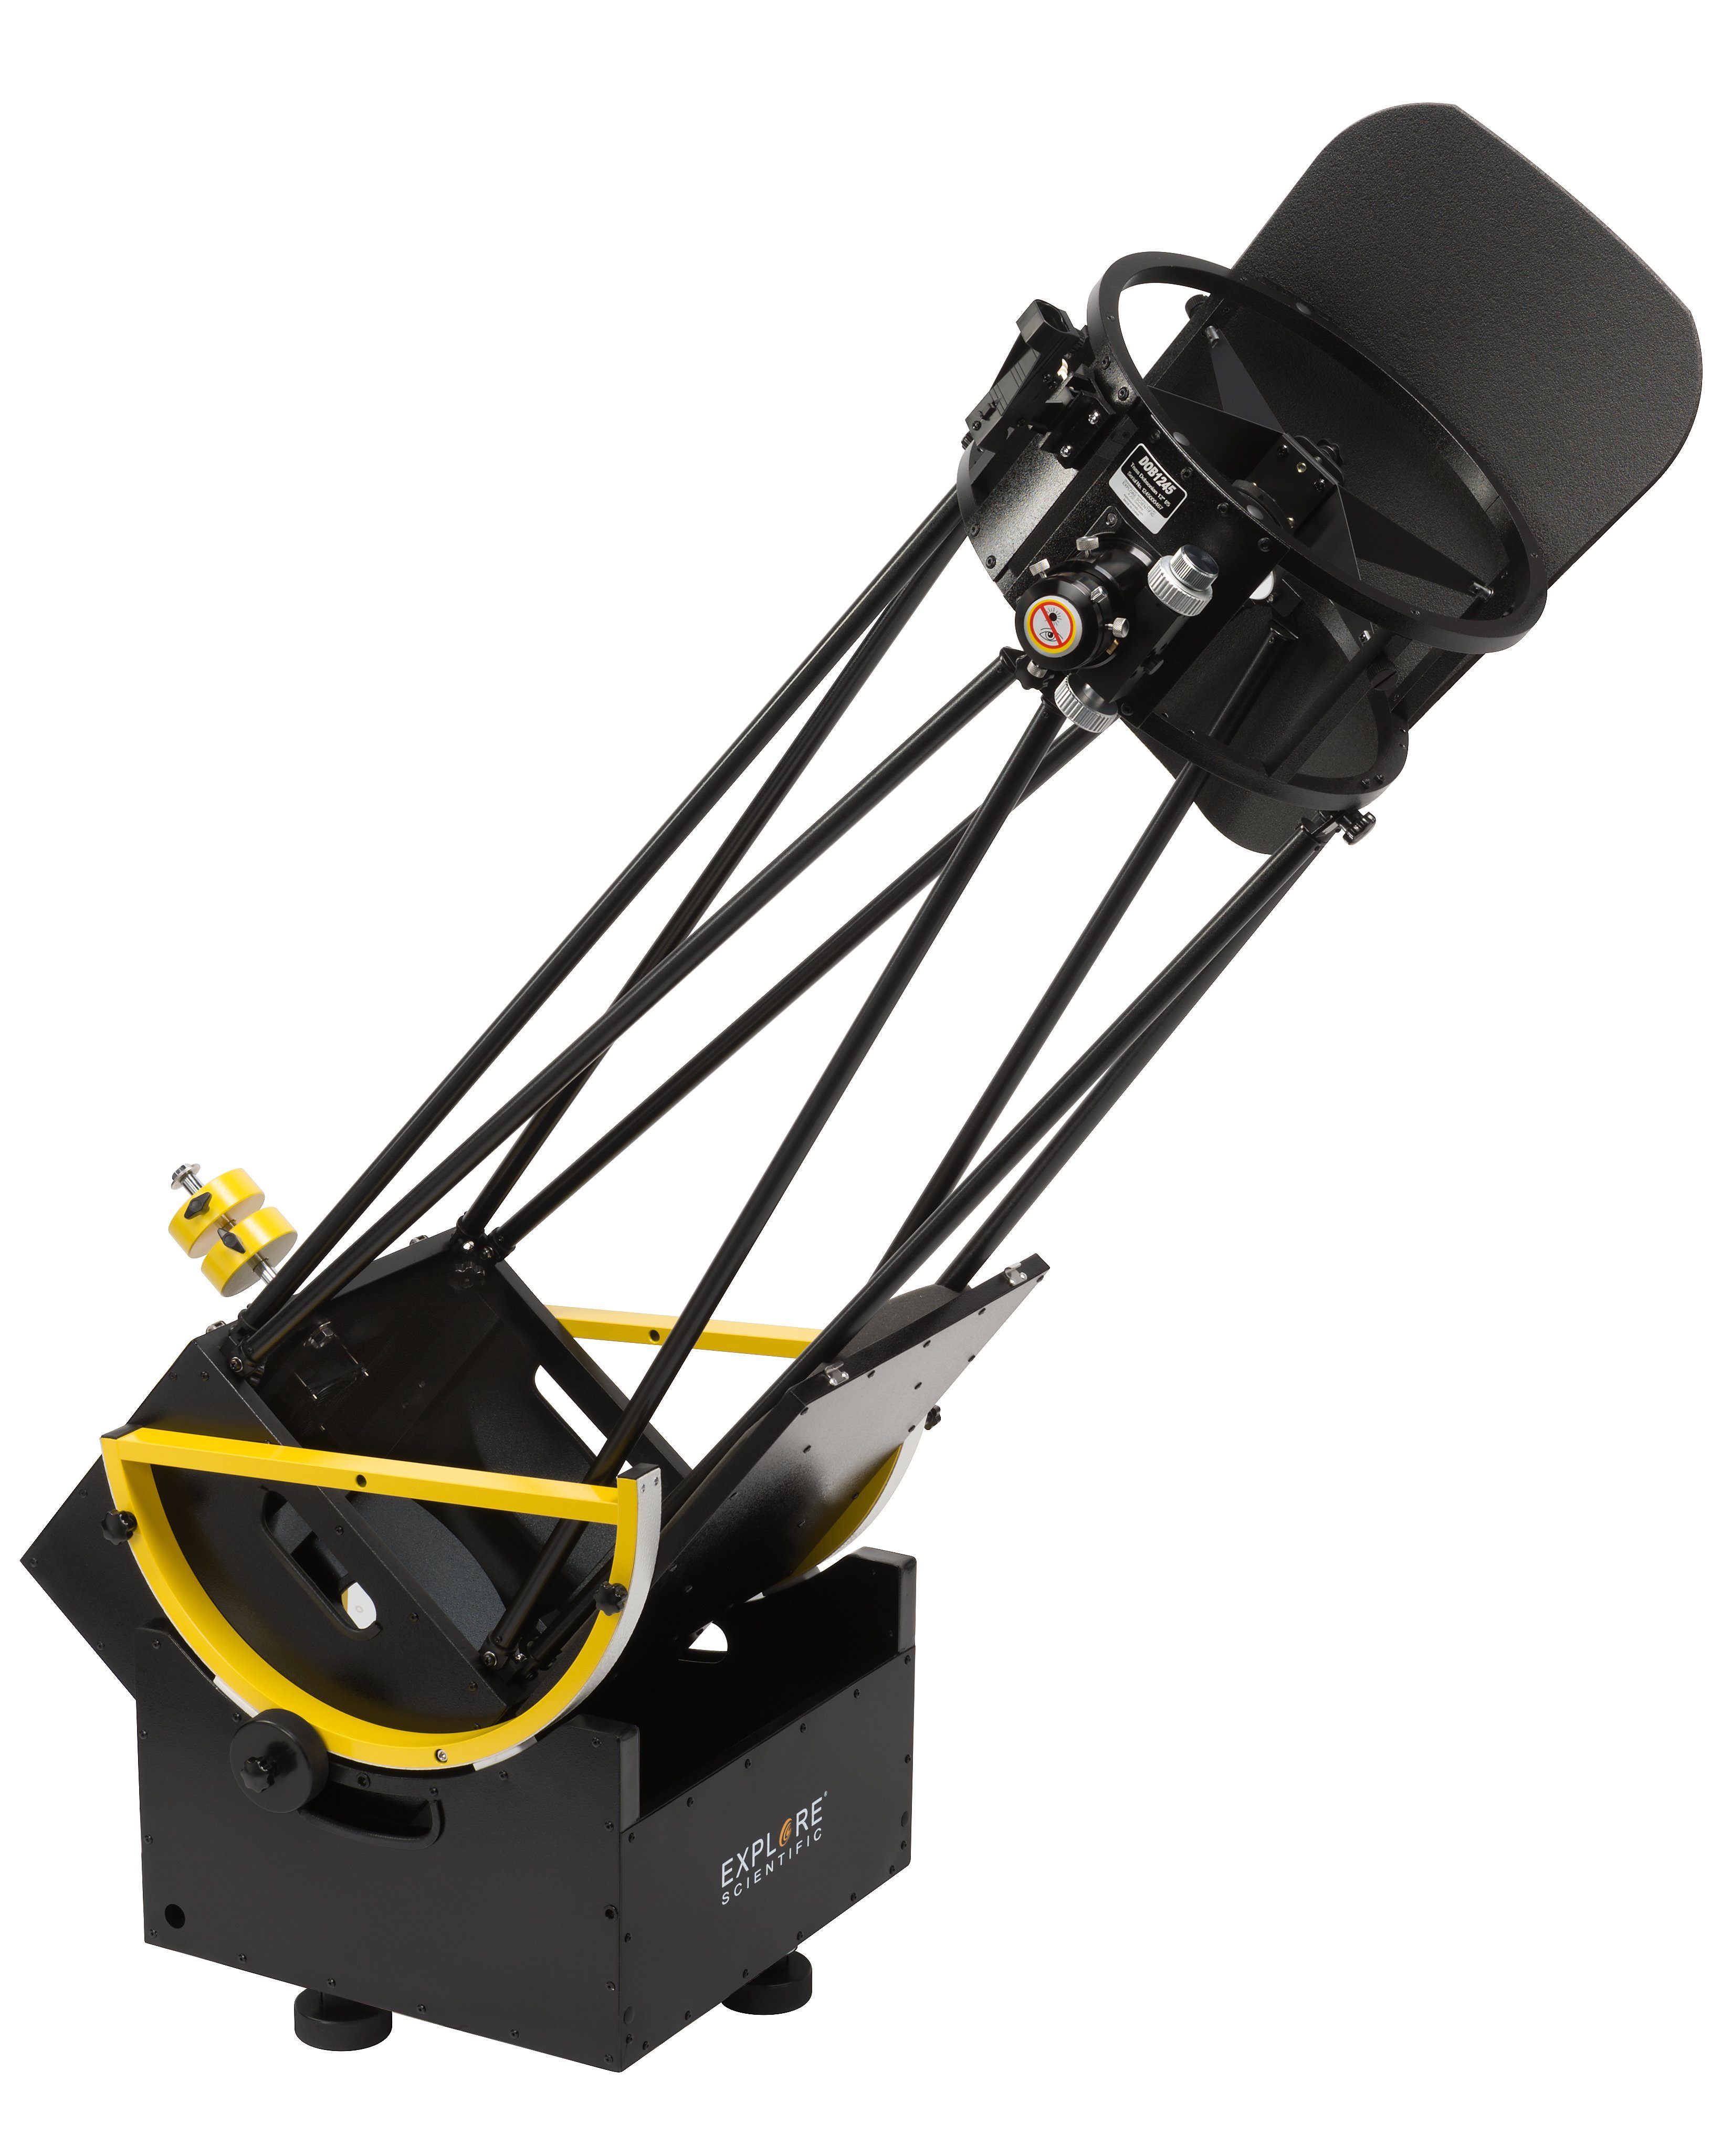 II Ultra 305mm Dobsonian Teleskop GENERATION Light EXPLORE SCIENTIFIC